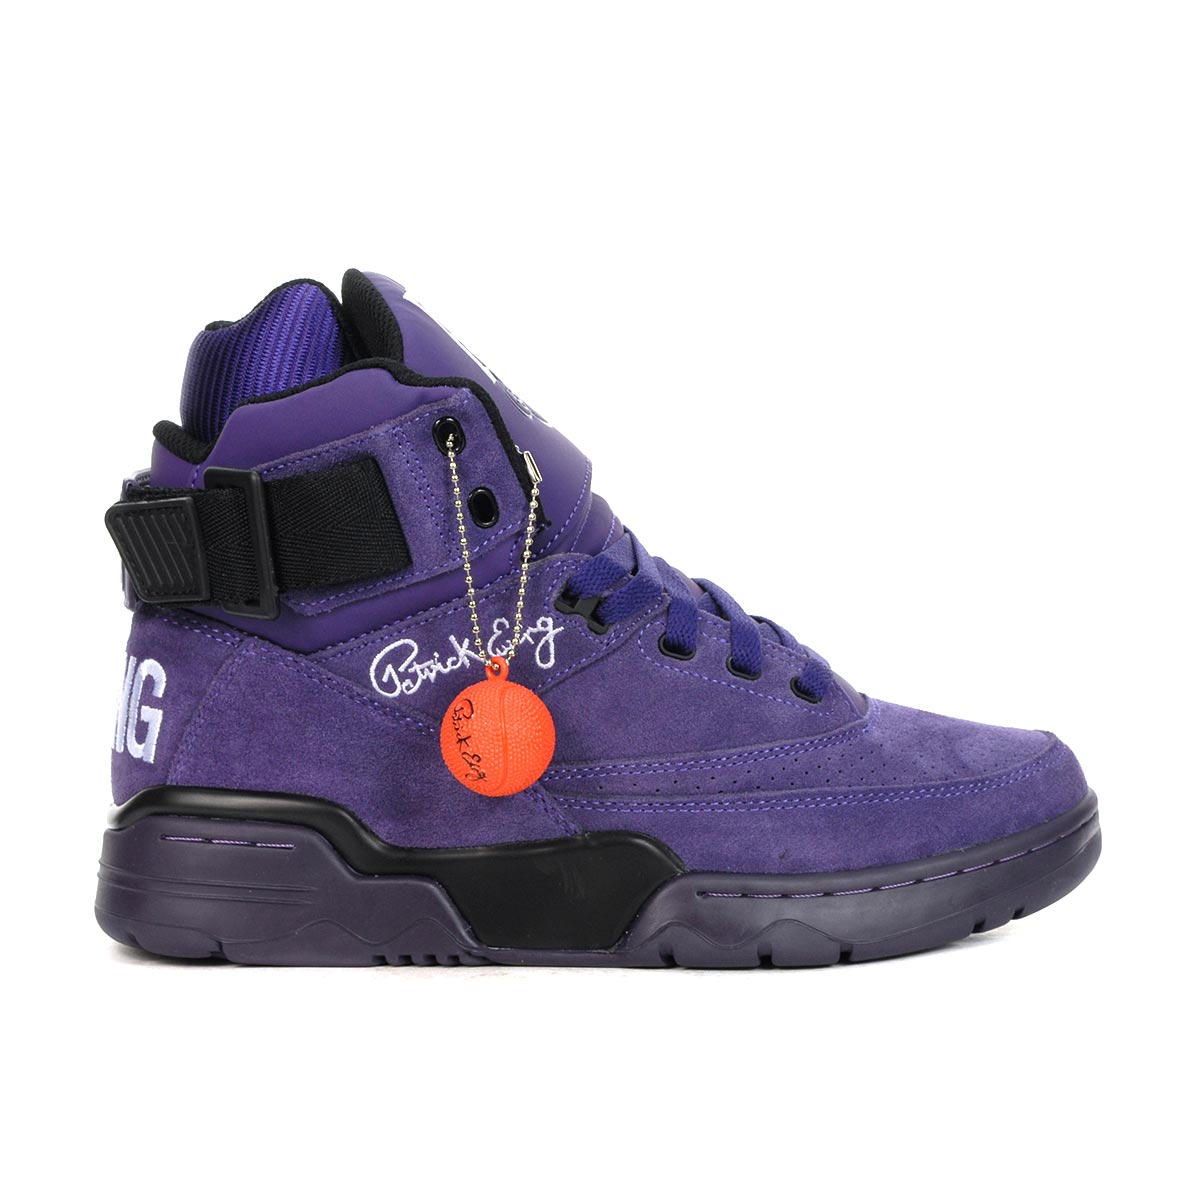 Patrick Ewing 33 HI OG Purple/Black Basketball Shoes - WOOKI.COM